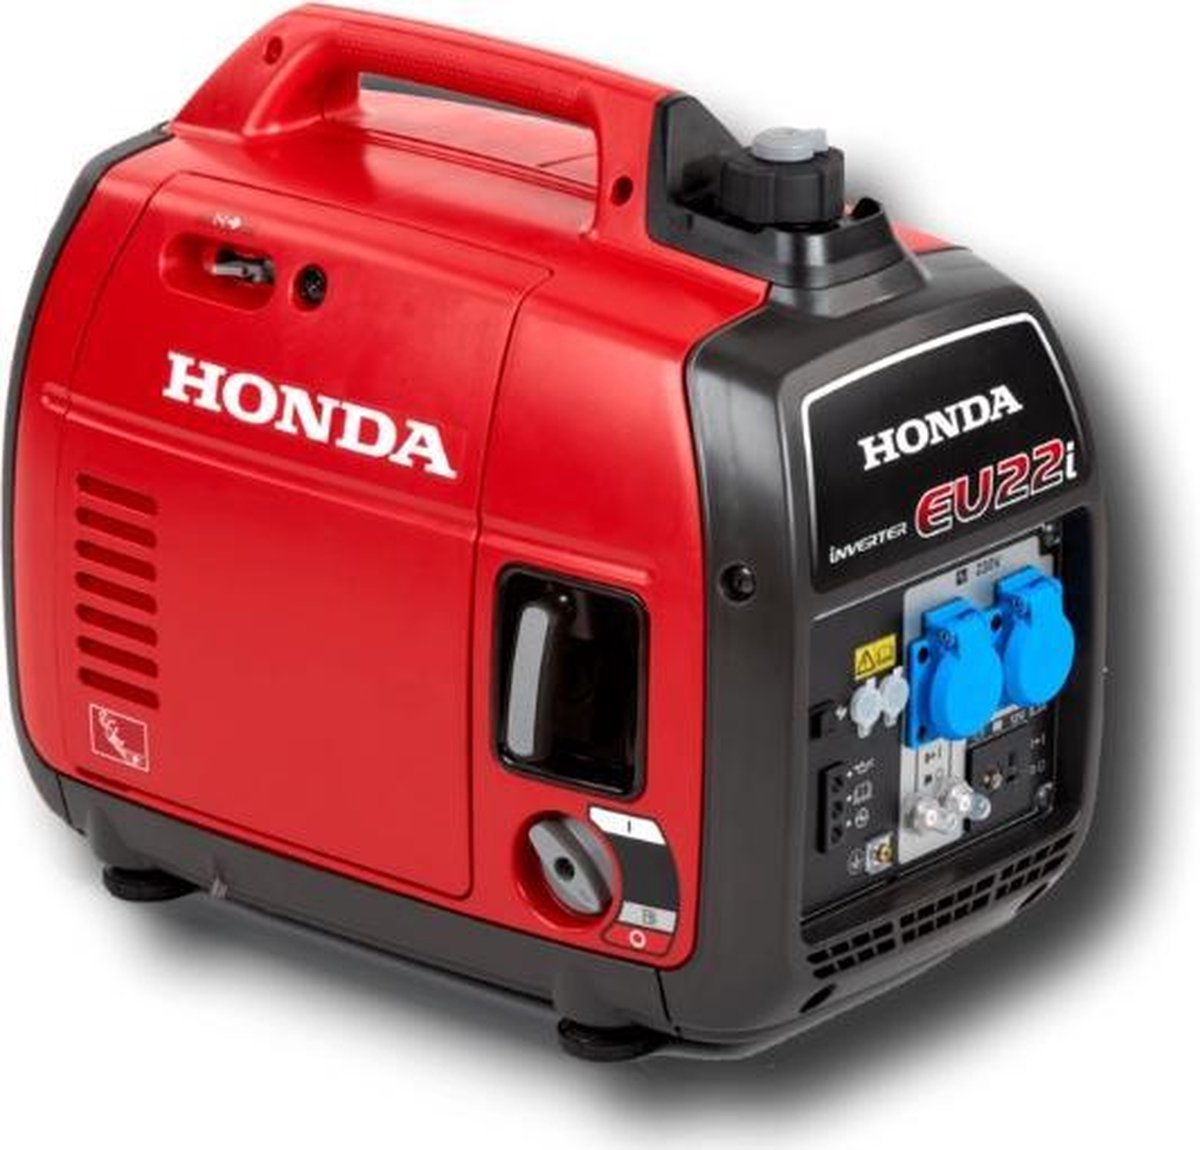 Honda EU22i draagbaar aggregaat / generator - 2200W | bol.com